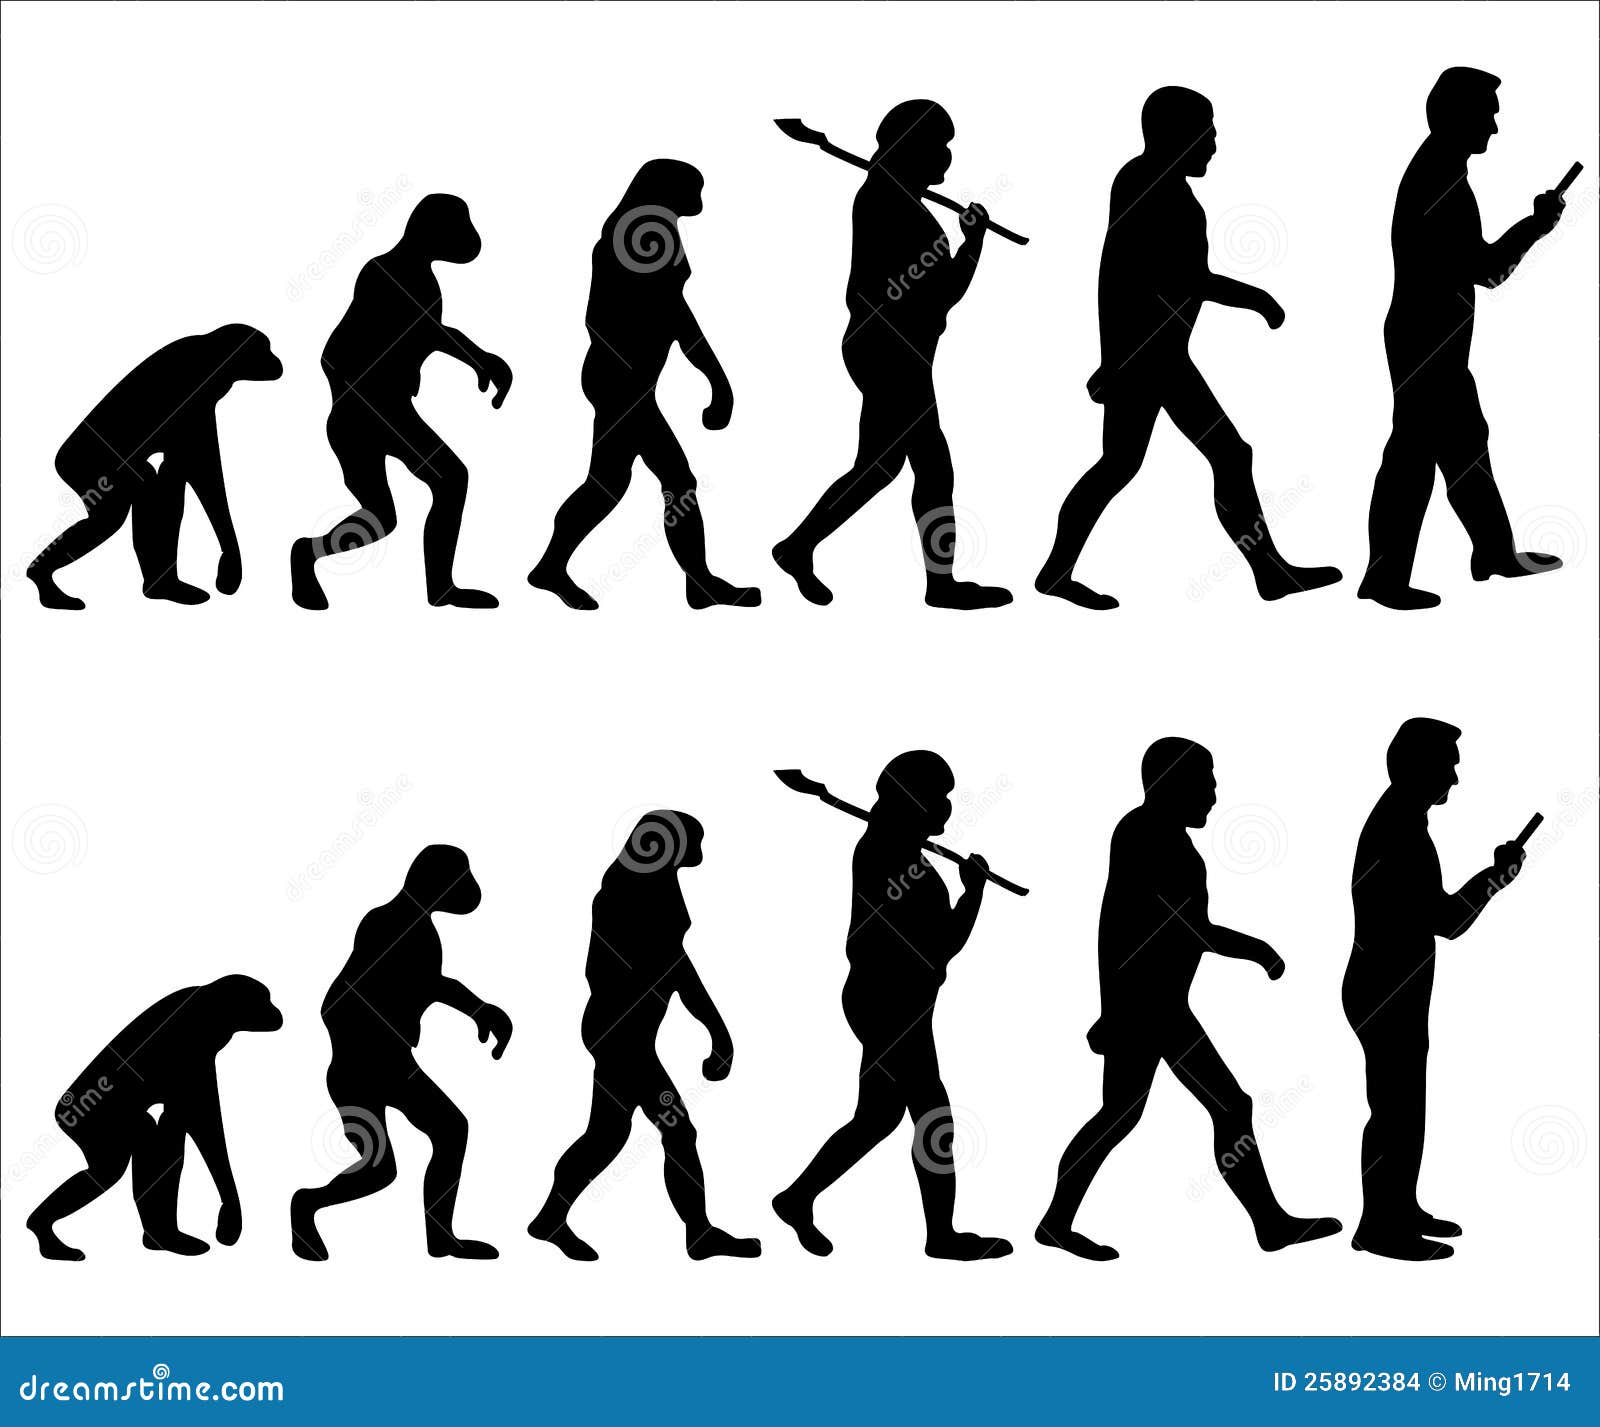 Next Human Evolution Illustration 25892384 - Megapixl